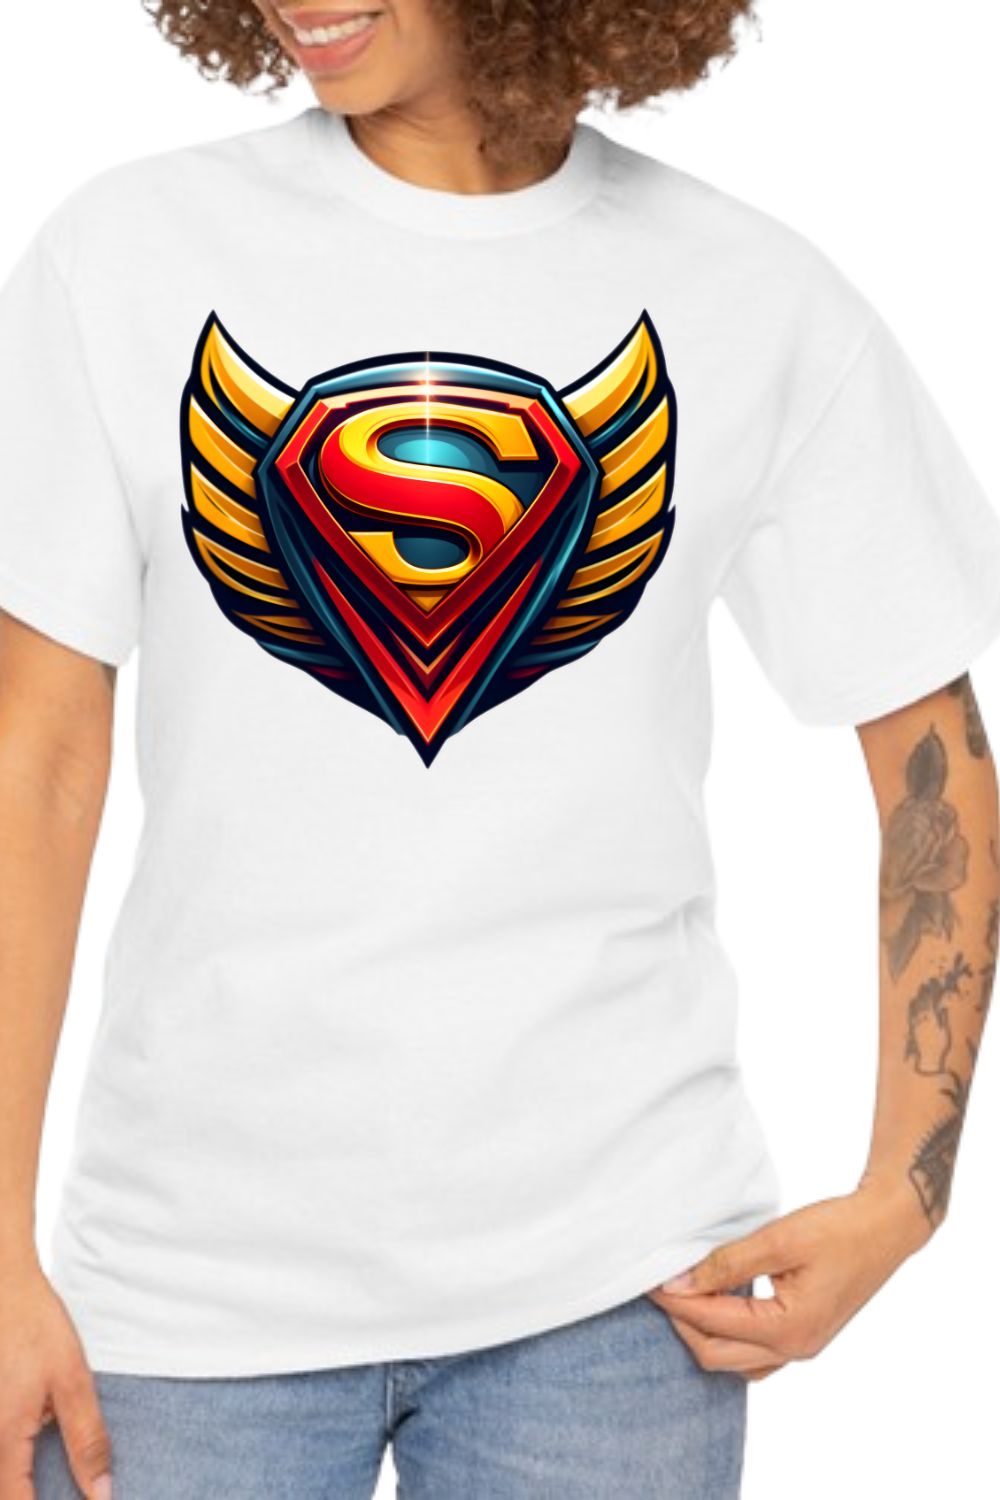 superhero T-shirt pinterest preview image.